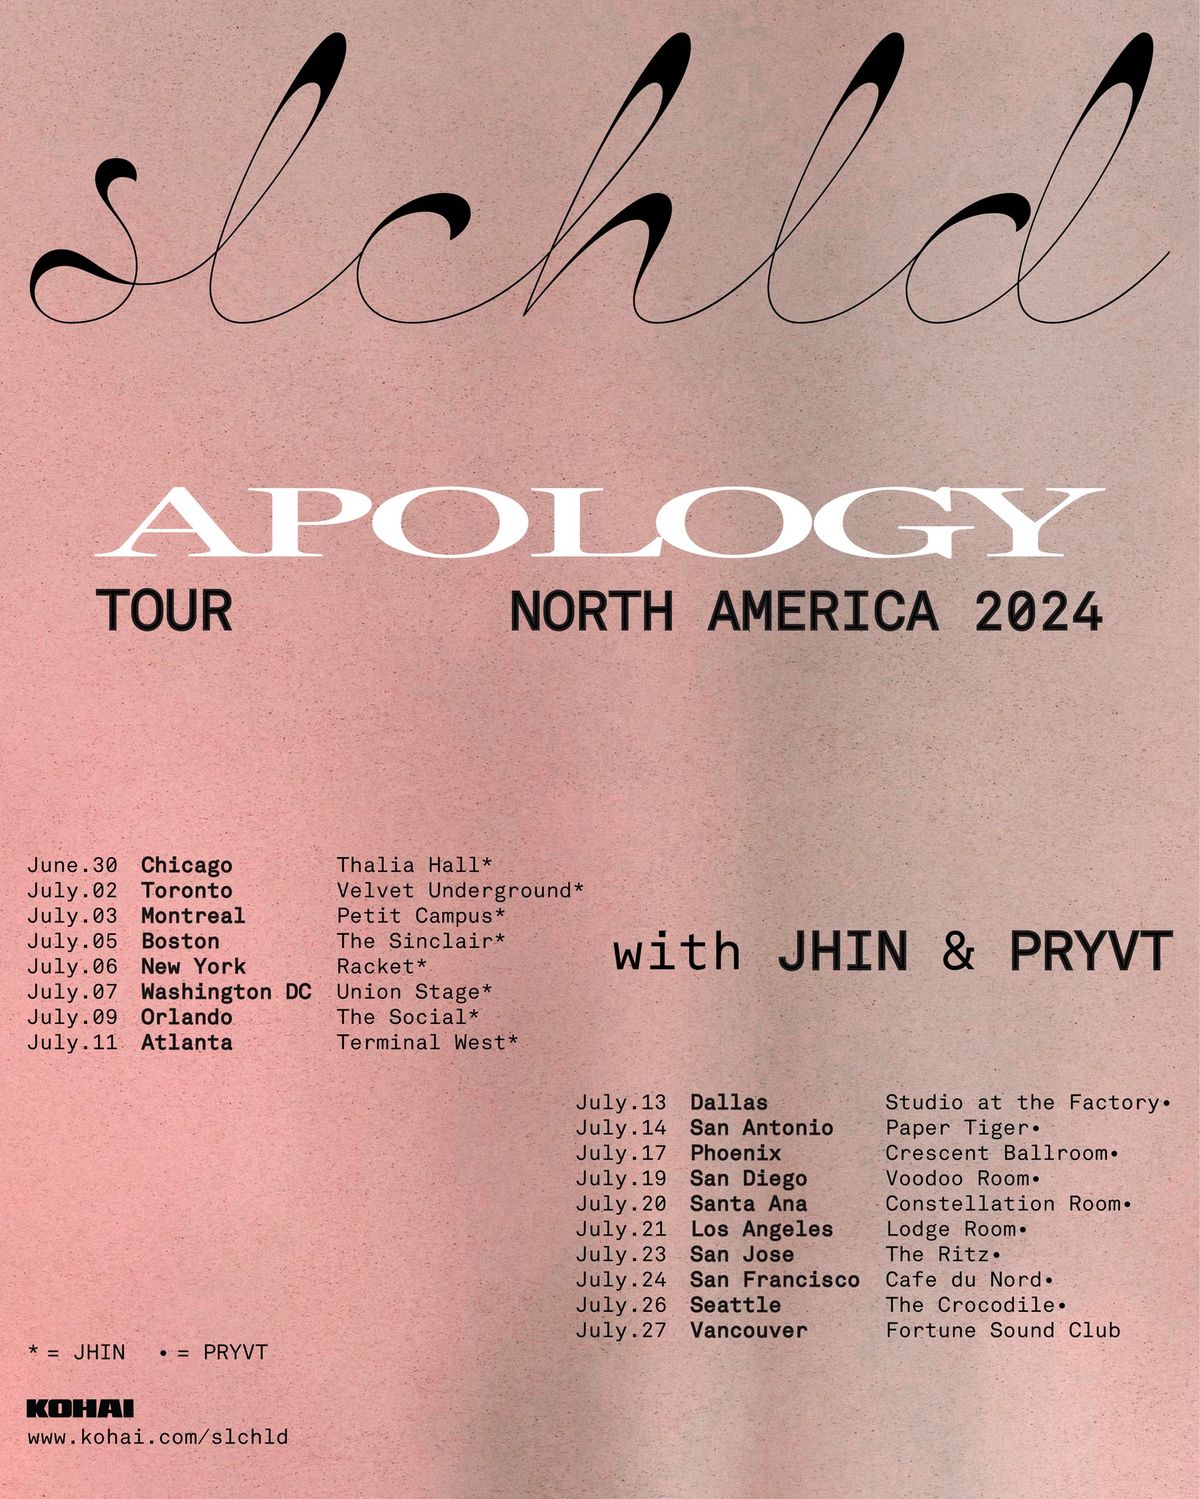 slchld 'Apology' North America Tour - Atlanta - July 11 at Terminal West